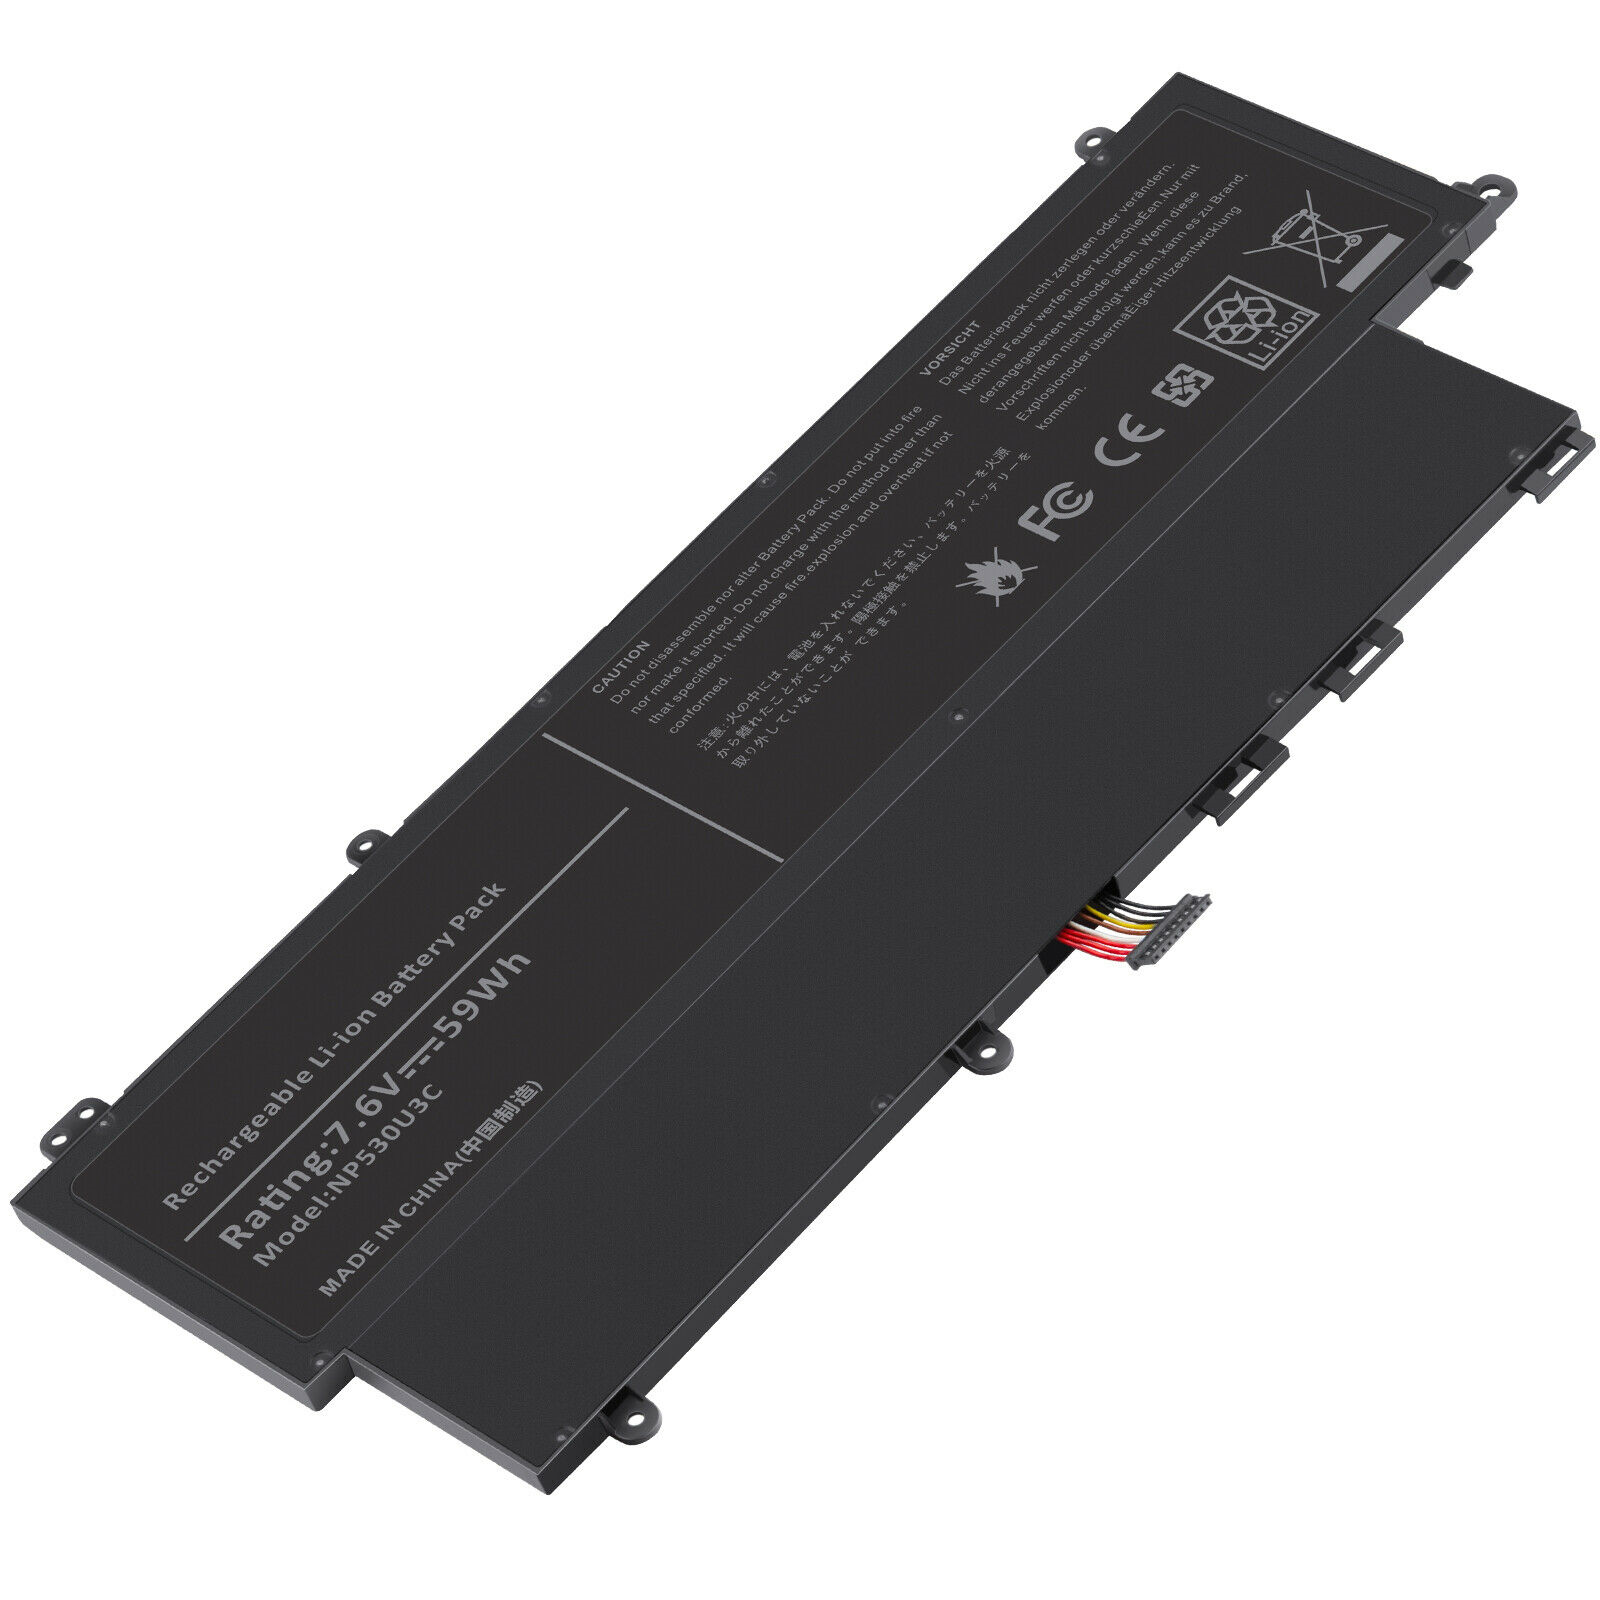 Samsung 530U3C-KC4 Replacement Battery